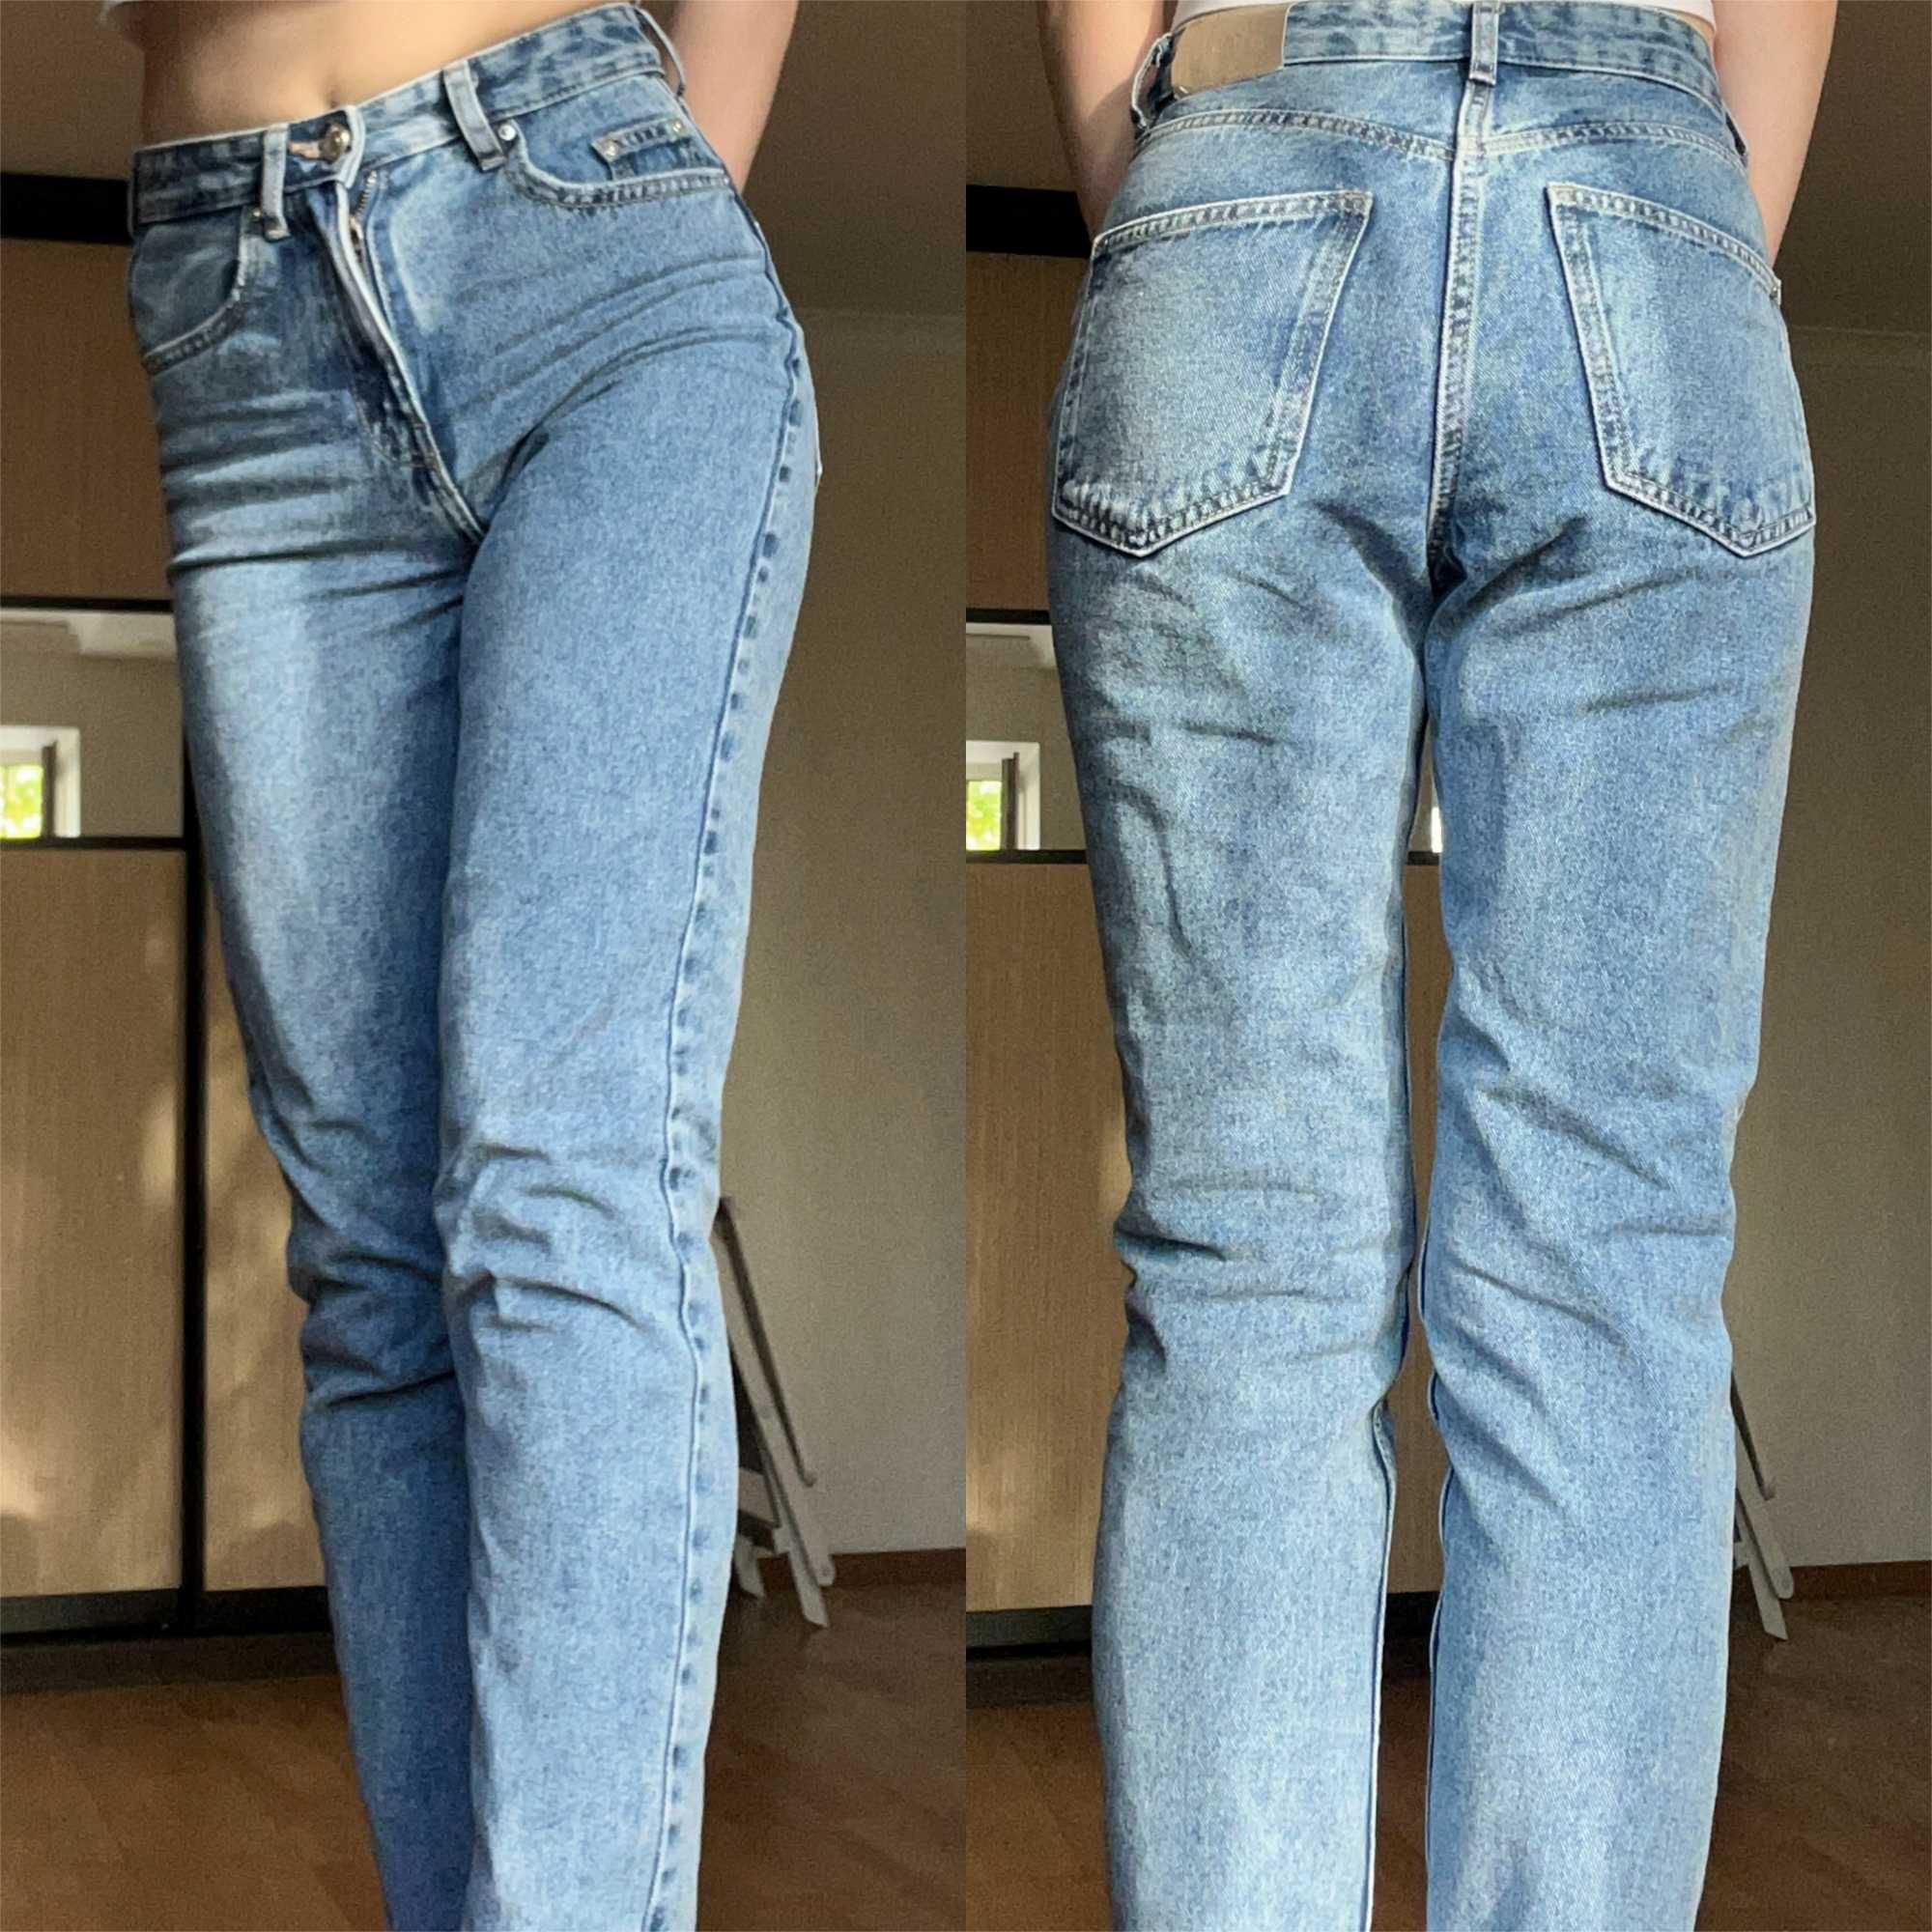 Новые джинсы Sinsay, Terranova (размер 32) Mom fit и Skinni